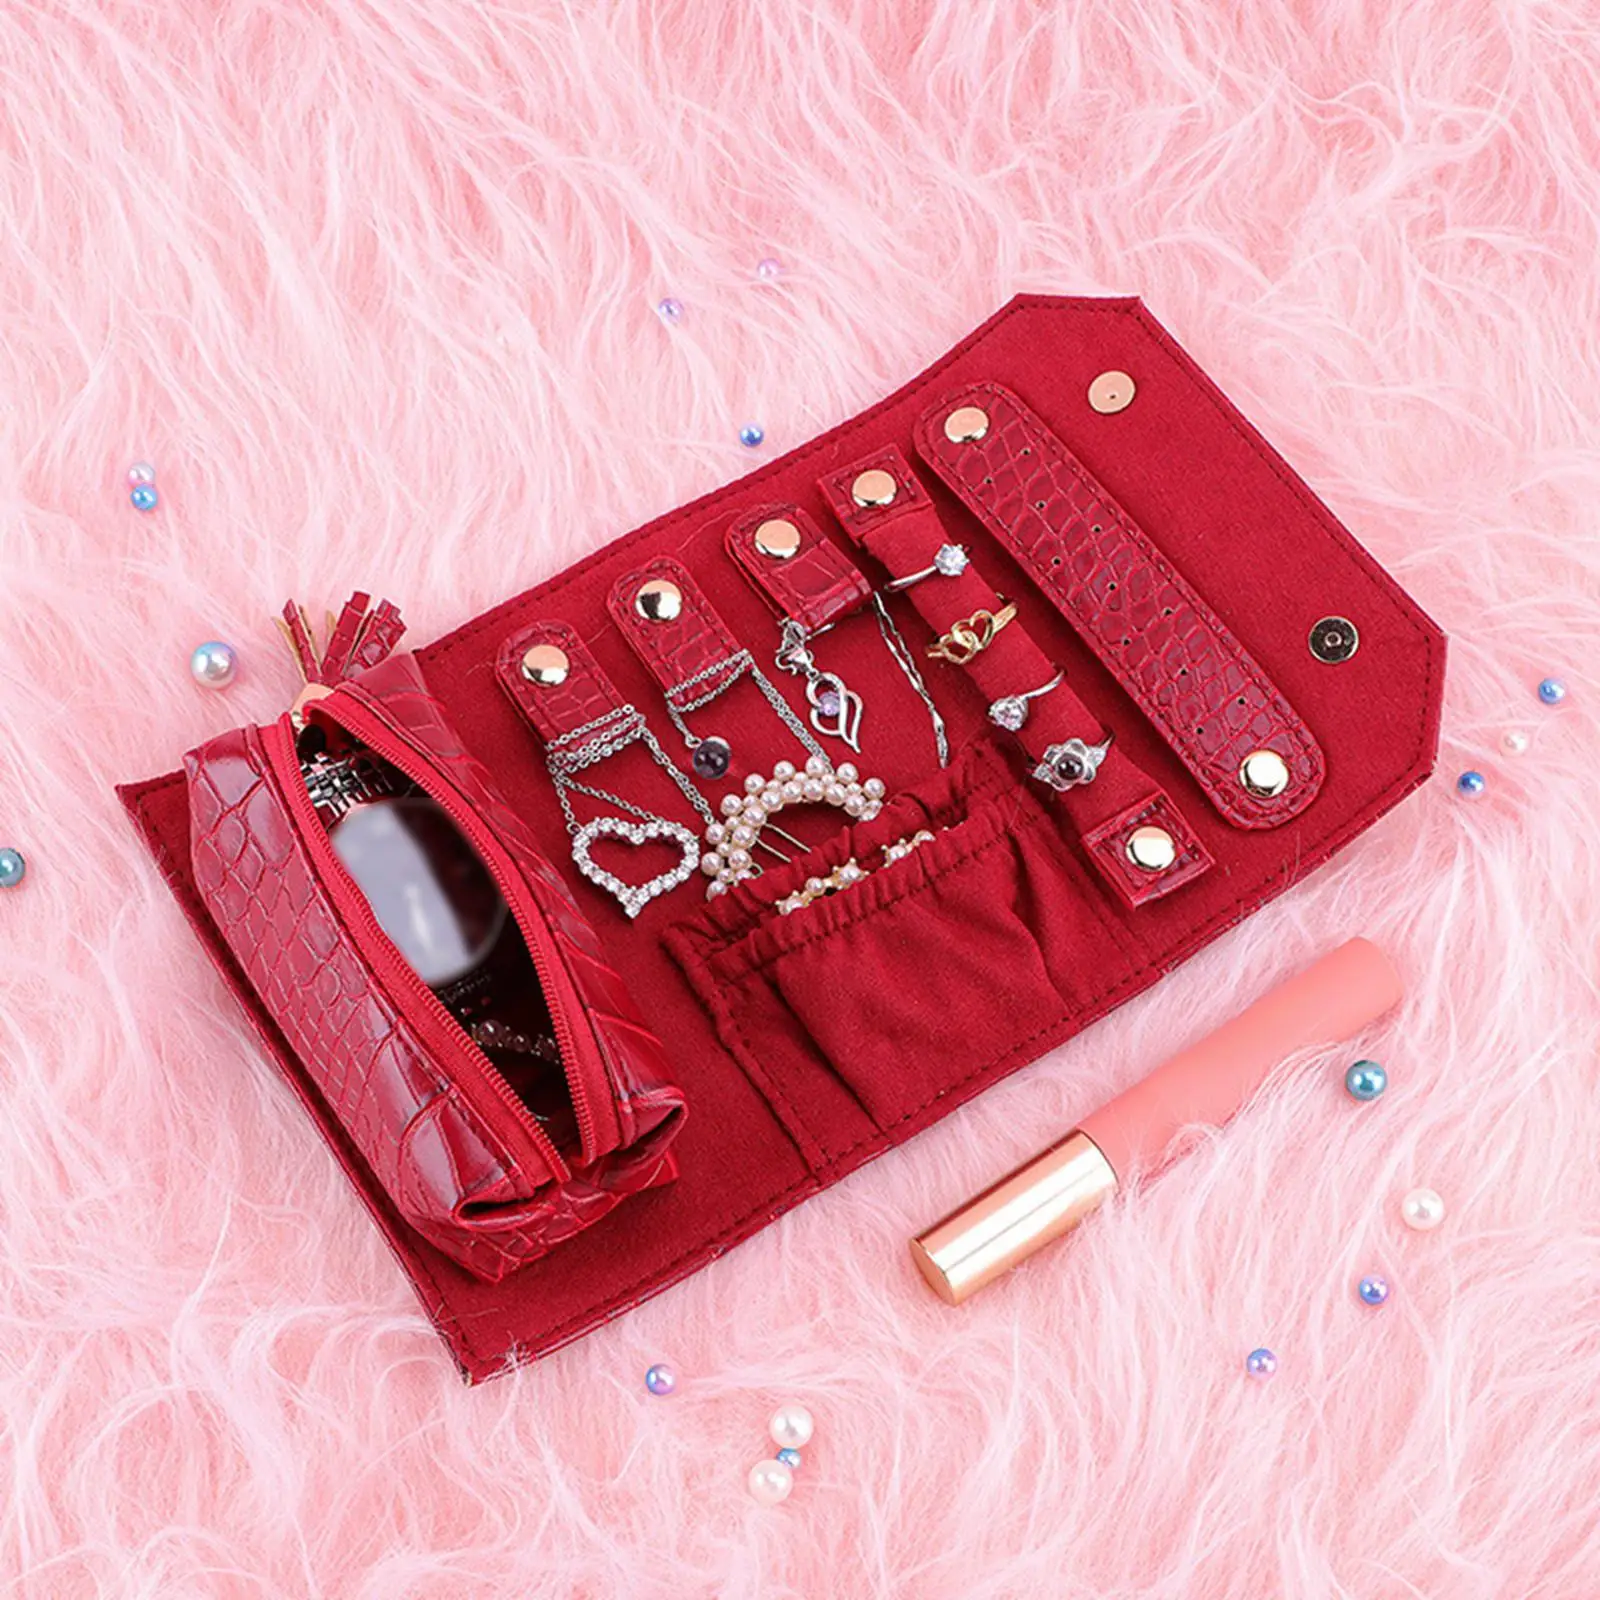 Portable Jewelry Roll Package Storage Organizer Storing Watches, Bracelets, Lipsticks Earrings, Ear Studs Accessory